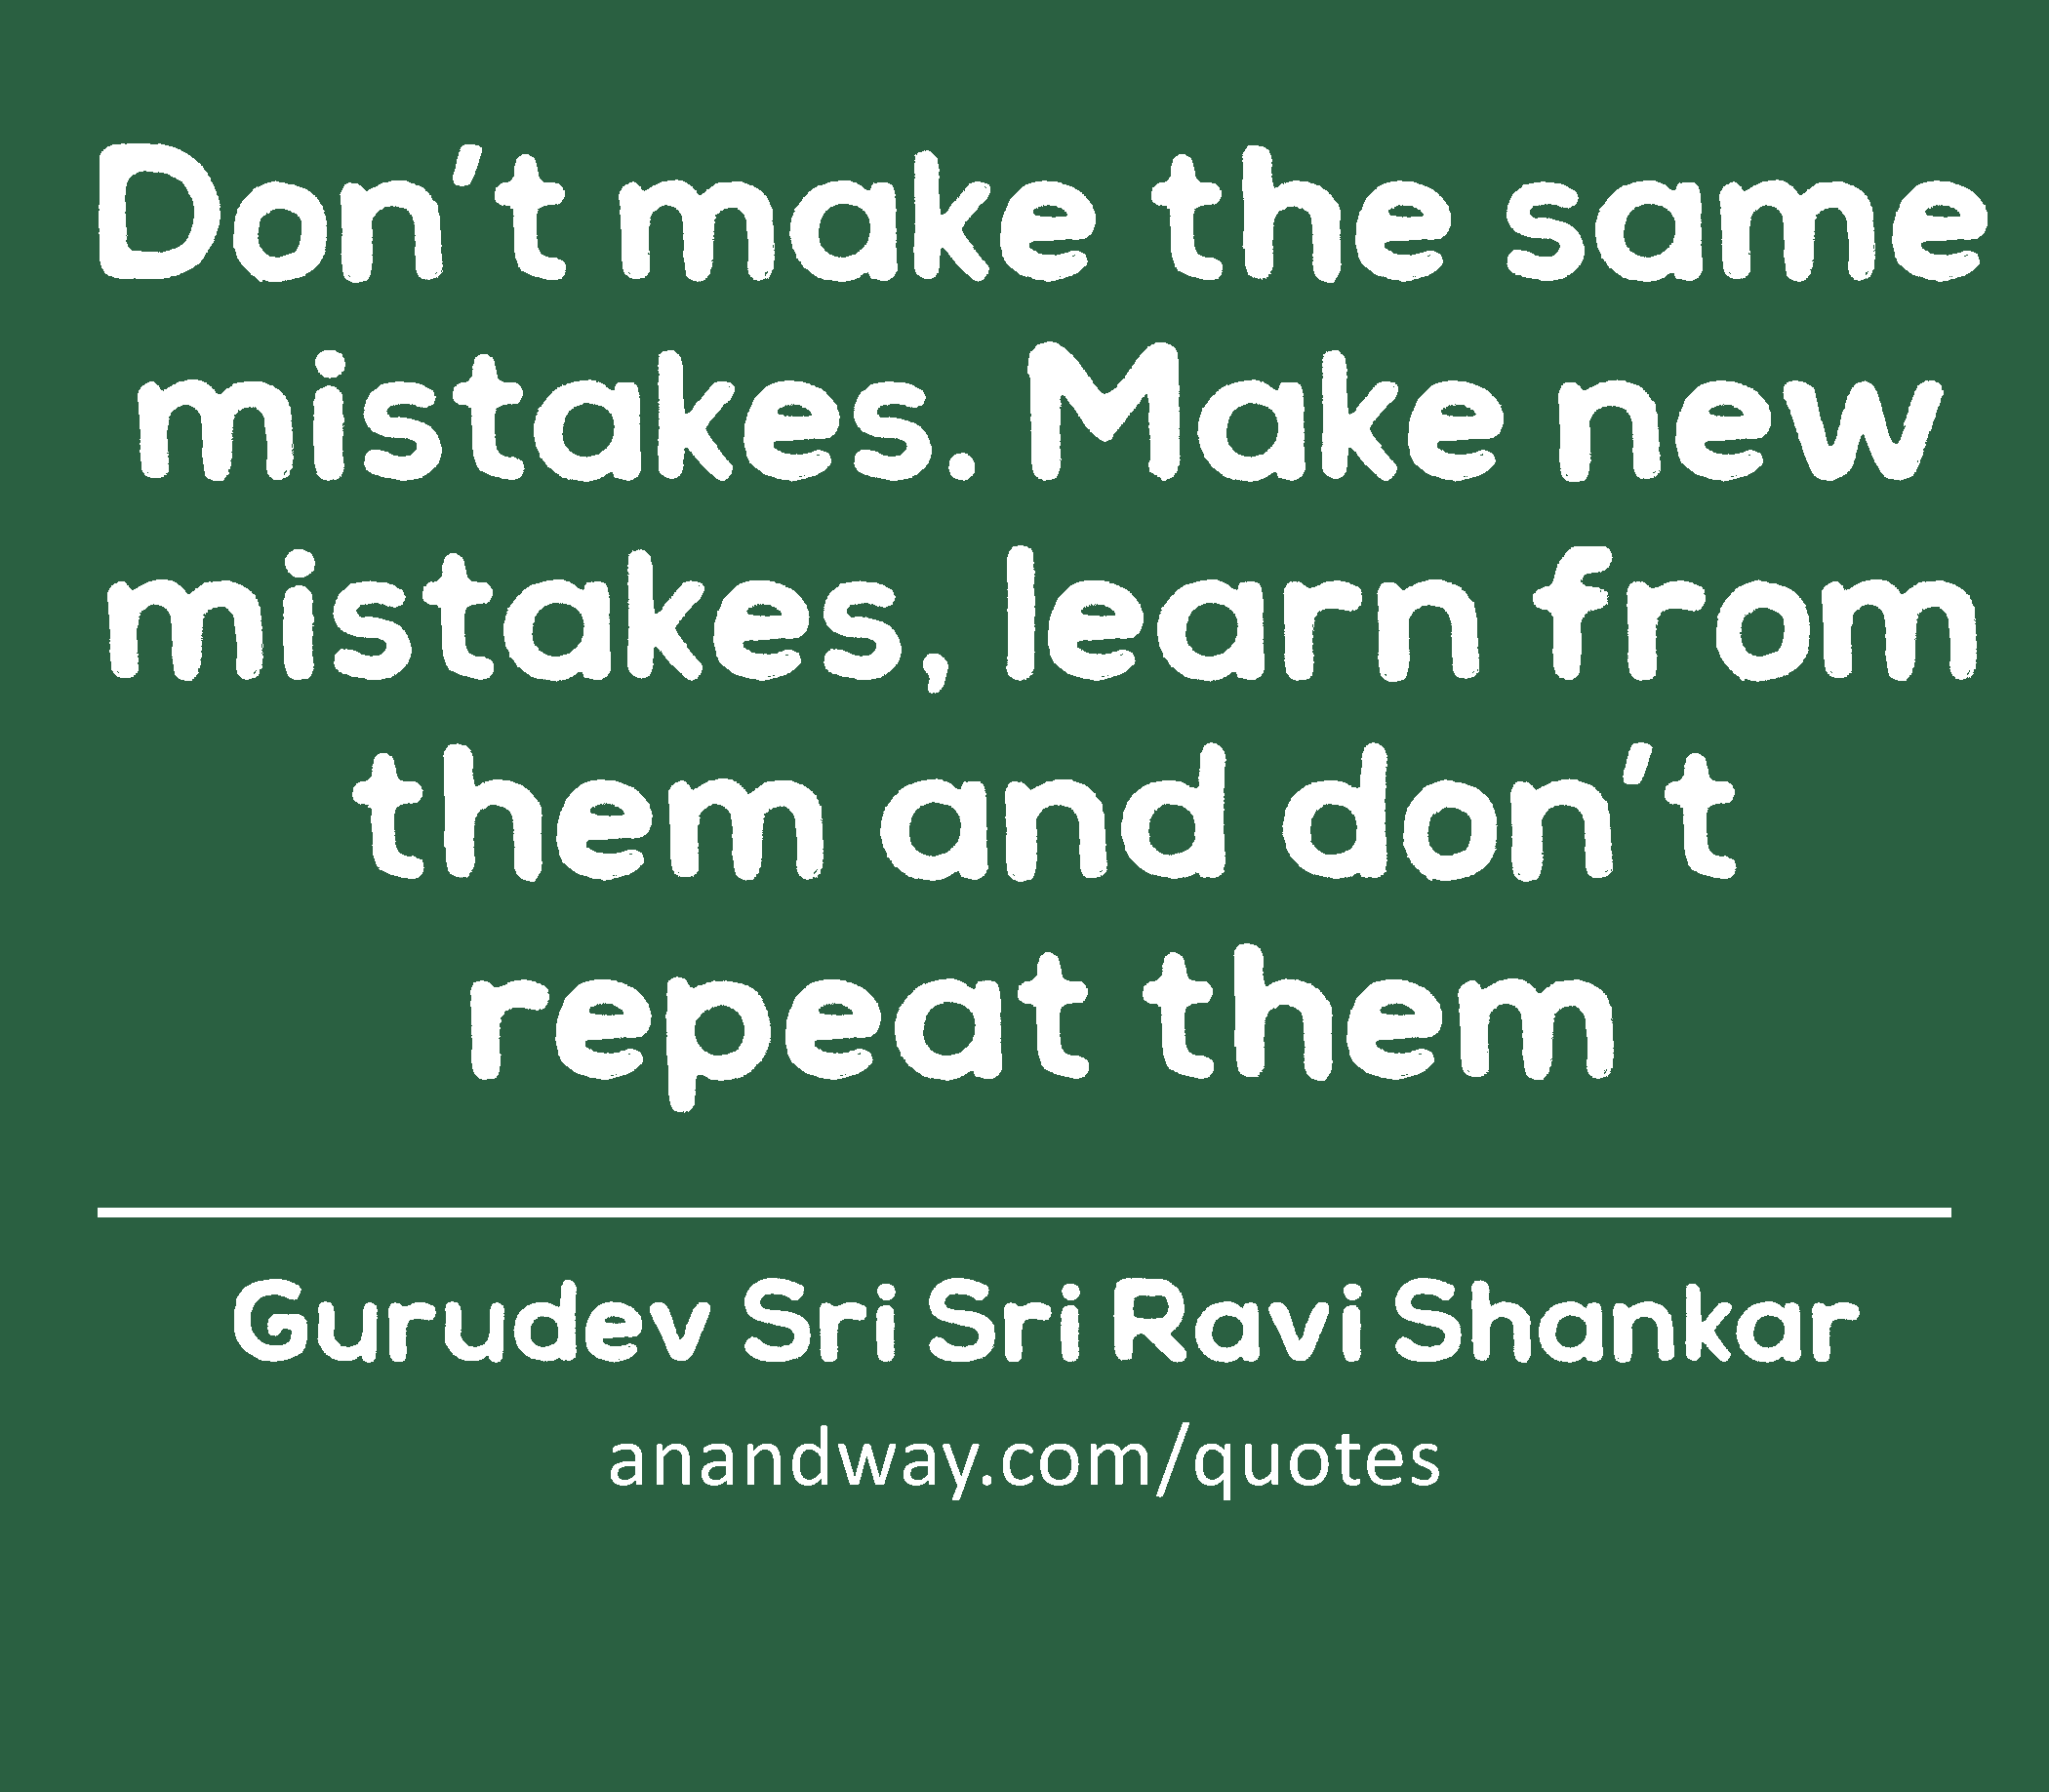 Don’t make the same mistakes. Make new mistakes, learn from them and don’t repeat them 
 -Gurudev Sri Sri Ravi Shankar